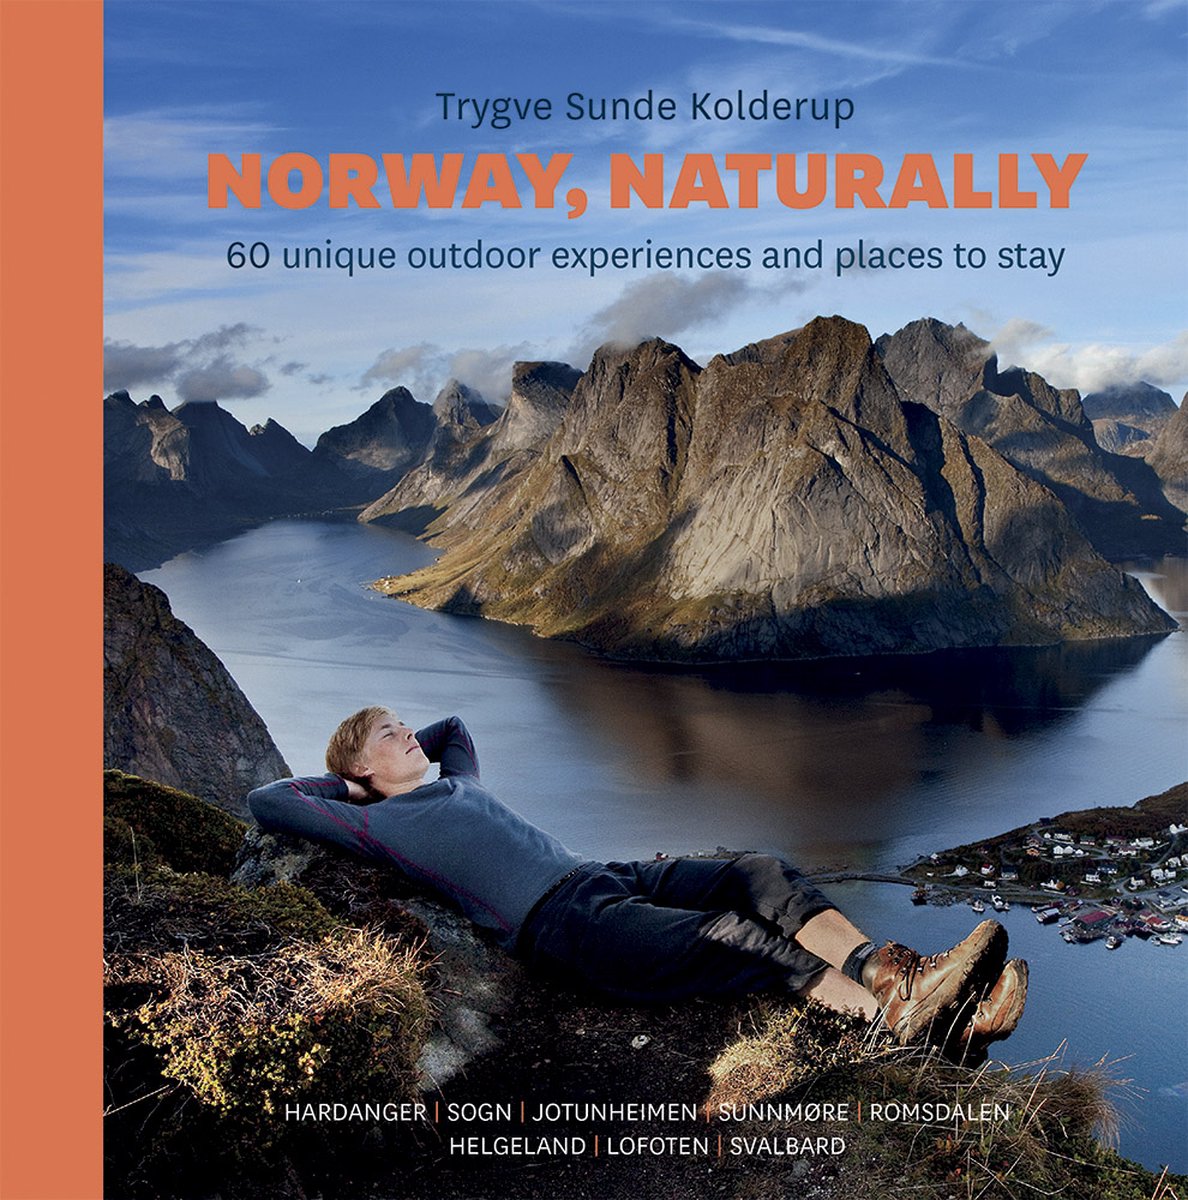 Norway, naturally - 60 unique outdoor experiences